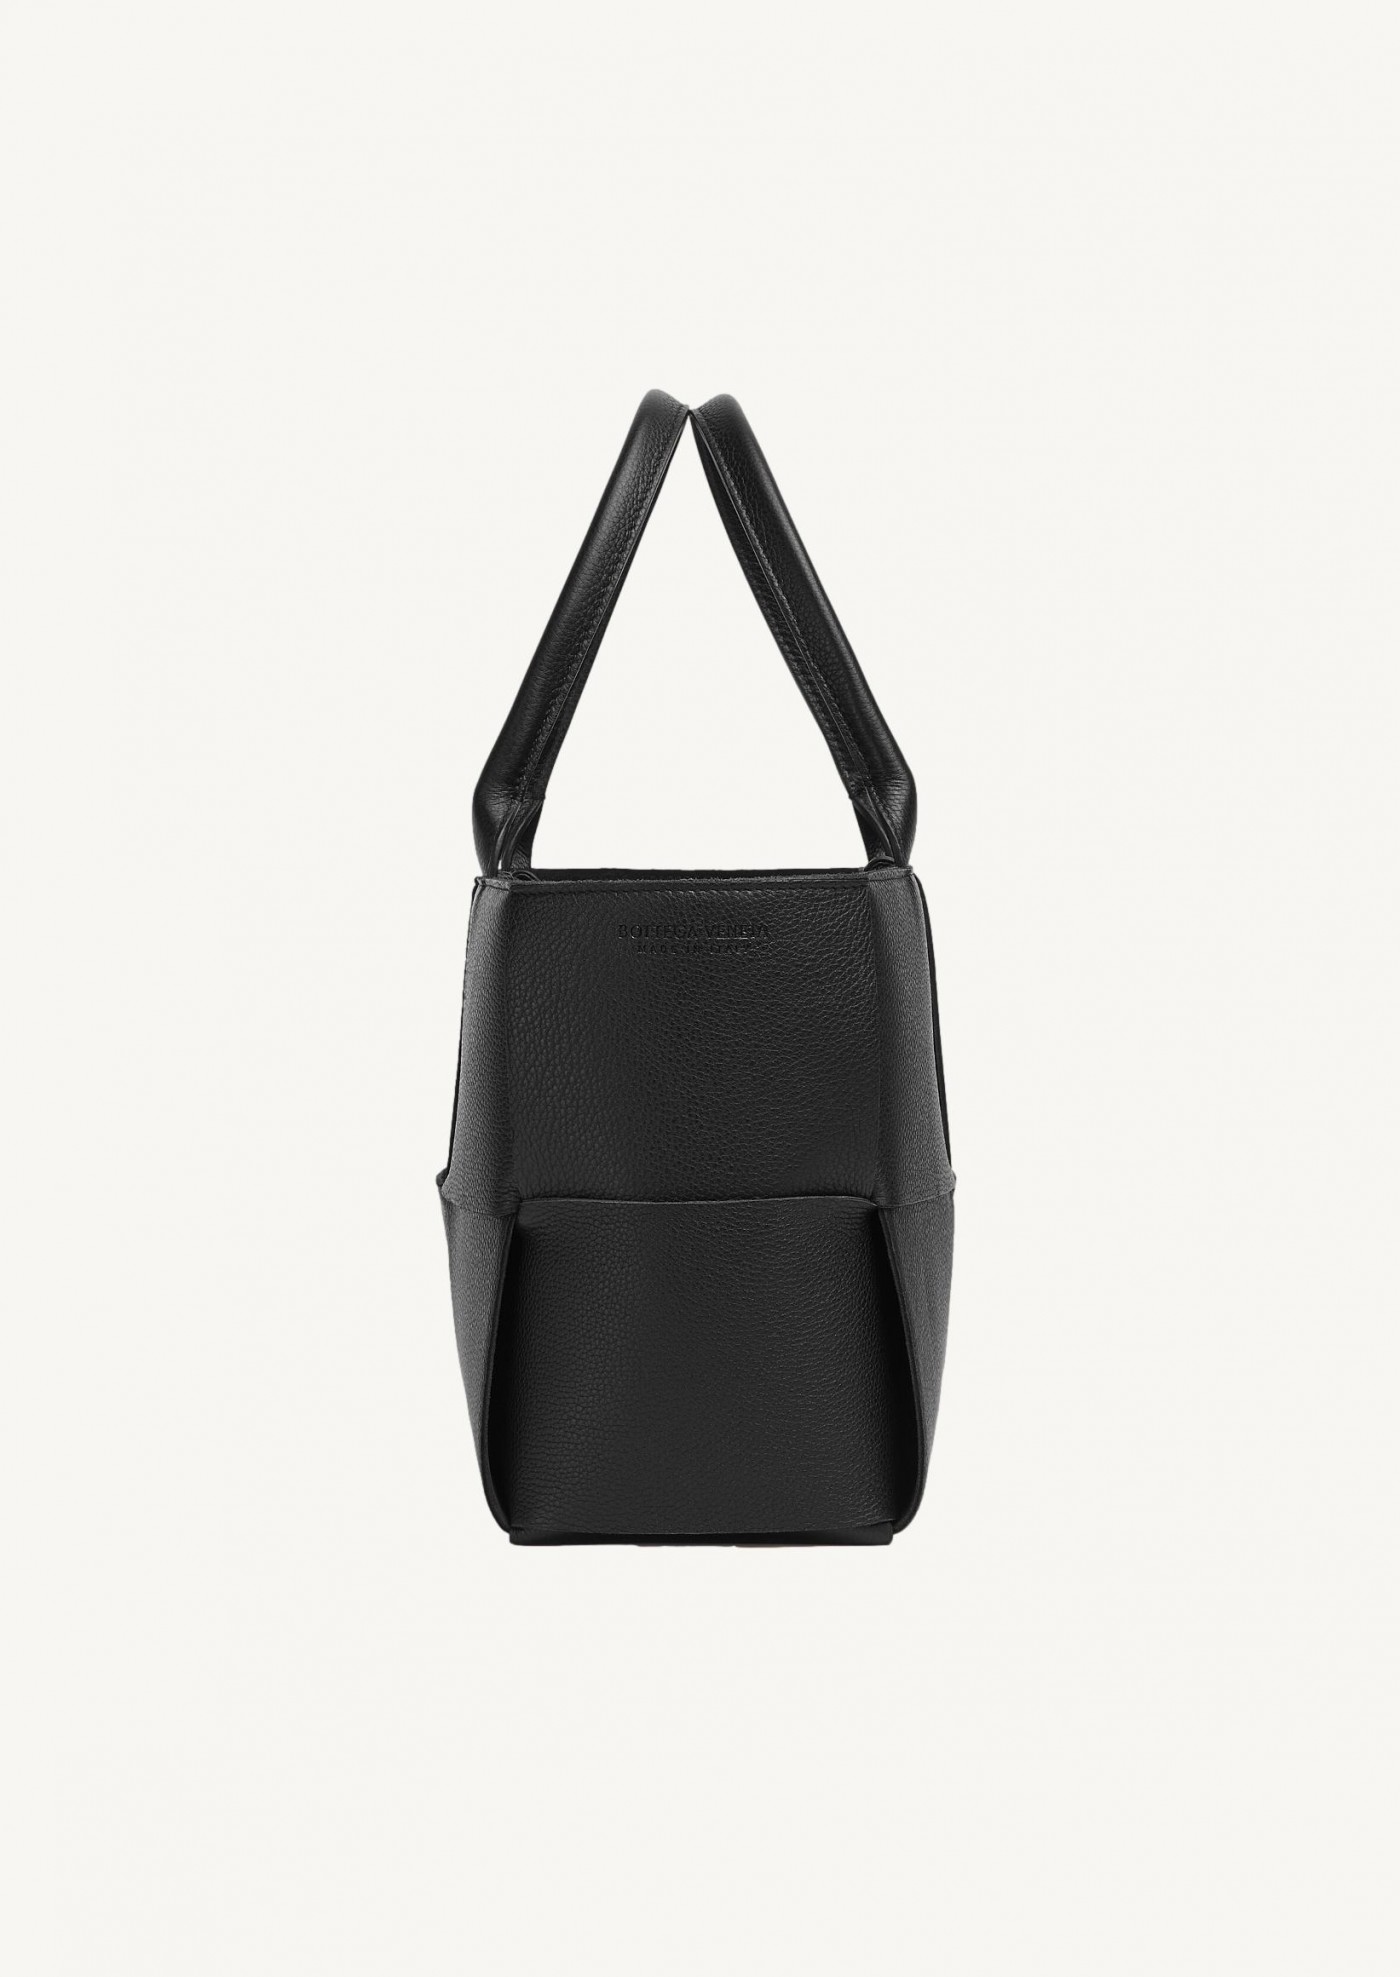 Arco Tote bag small size black